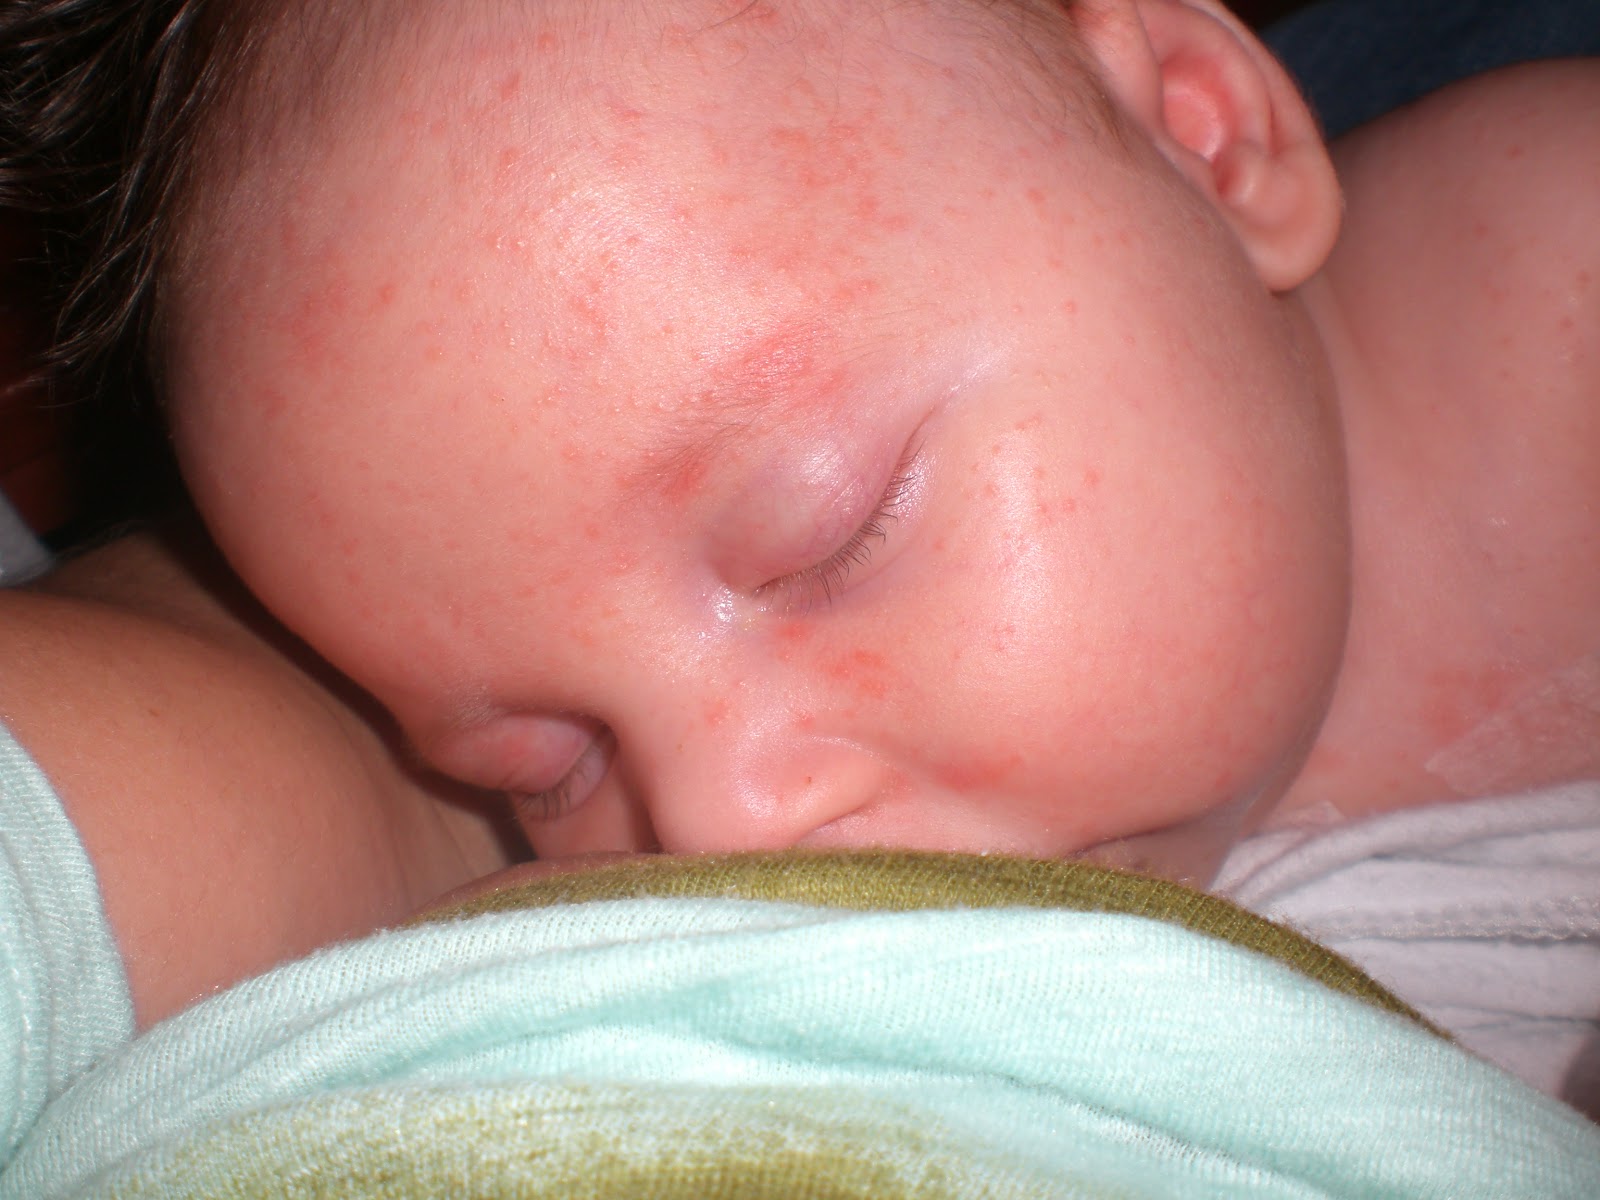 Meningitis Rash Baby Pictures